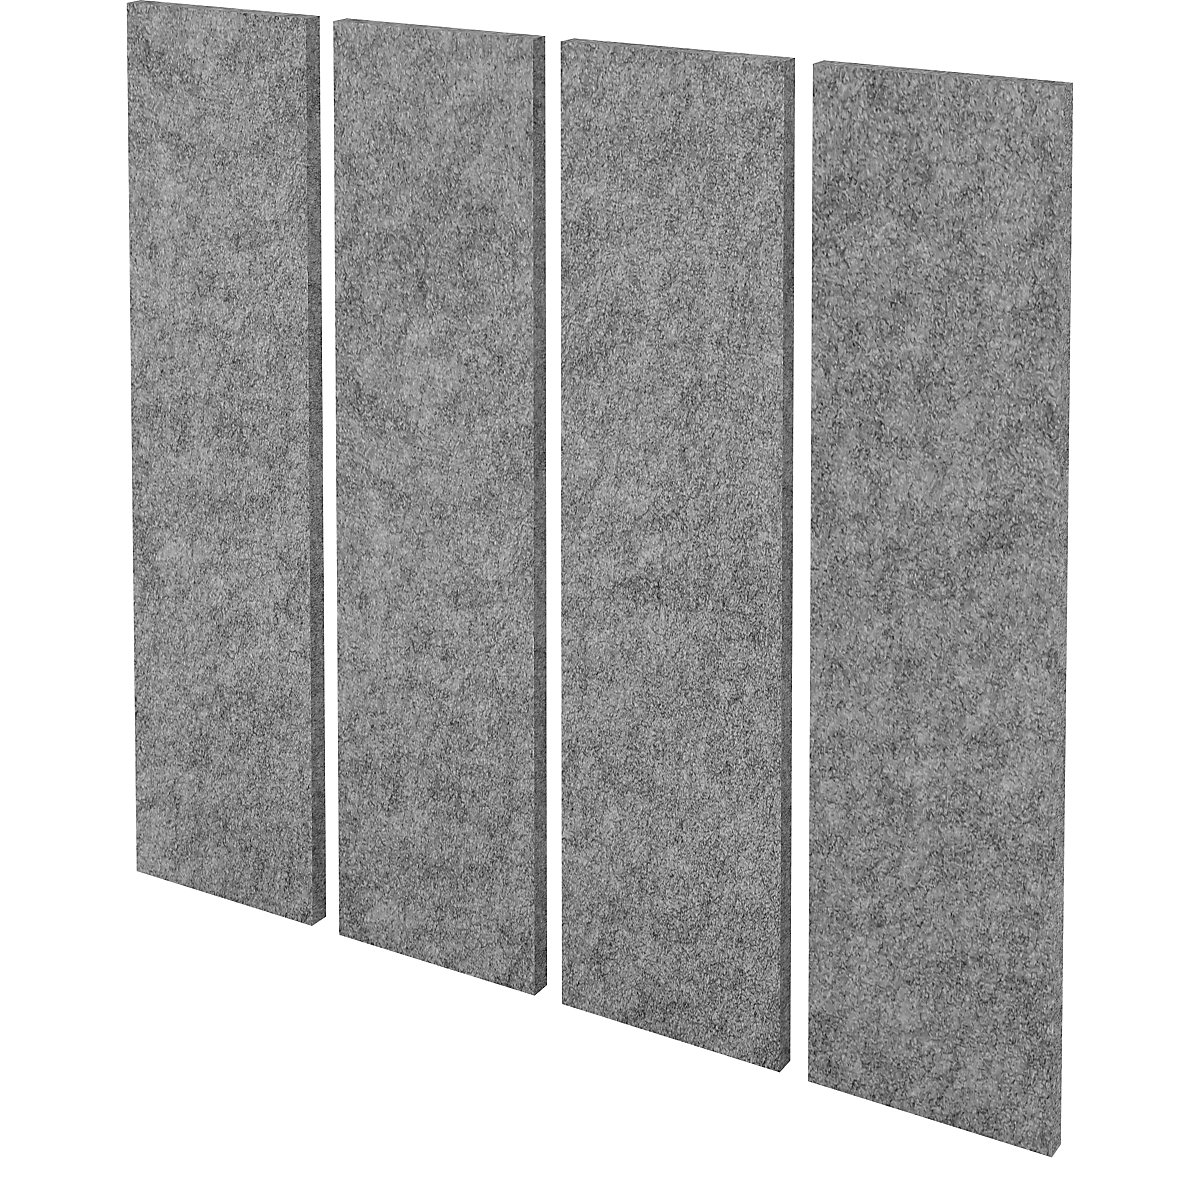 Sada akustických nástěnných panelů, tloušťka stěny 25 mm, šedá melírovaná, bal.j. 4 ks, v x š 1000 x 250 mm-5